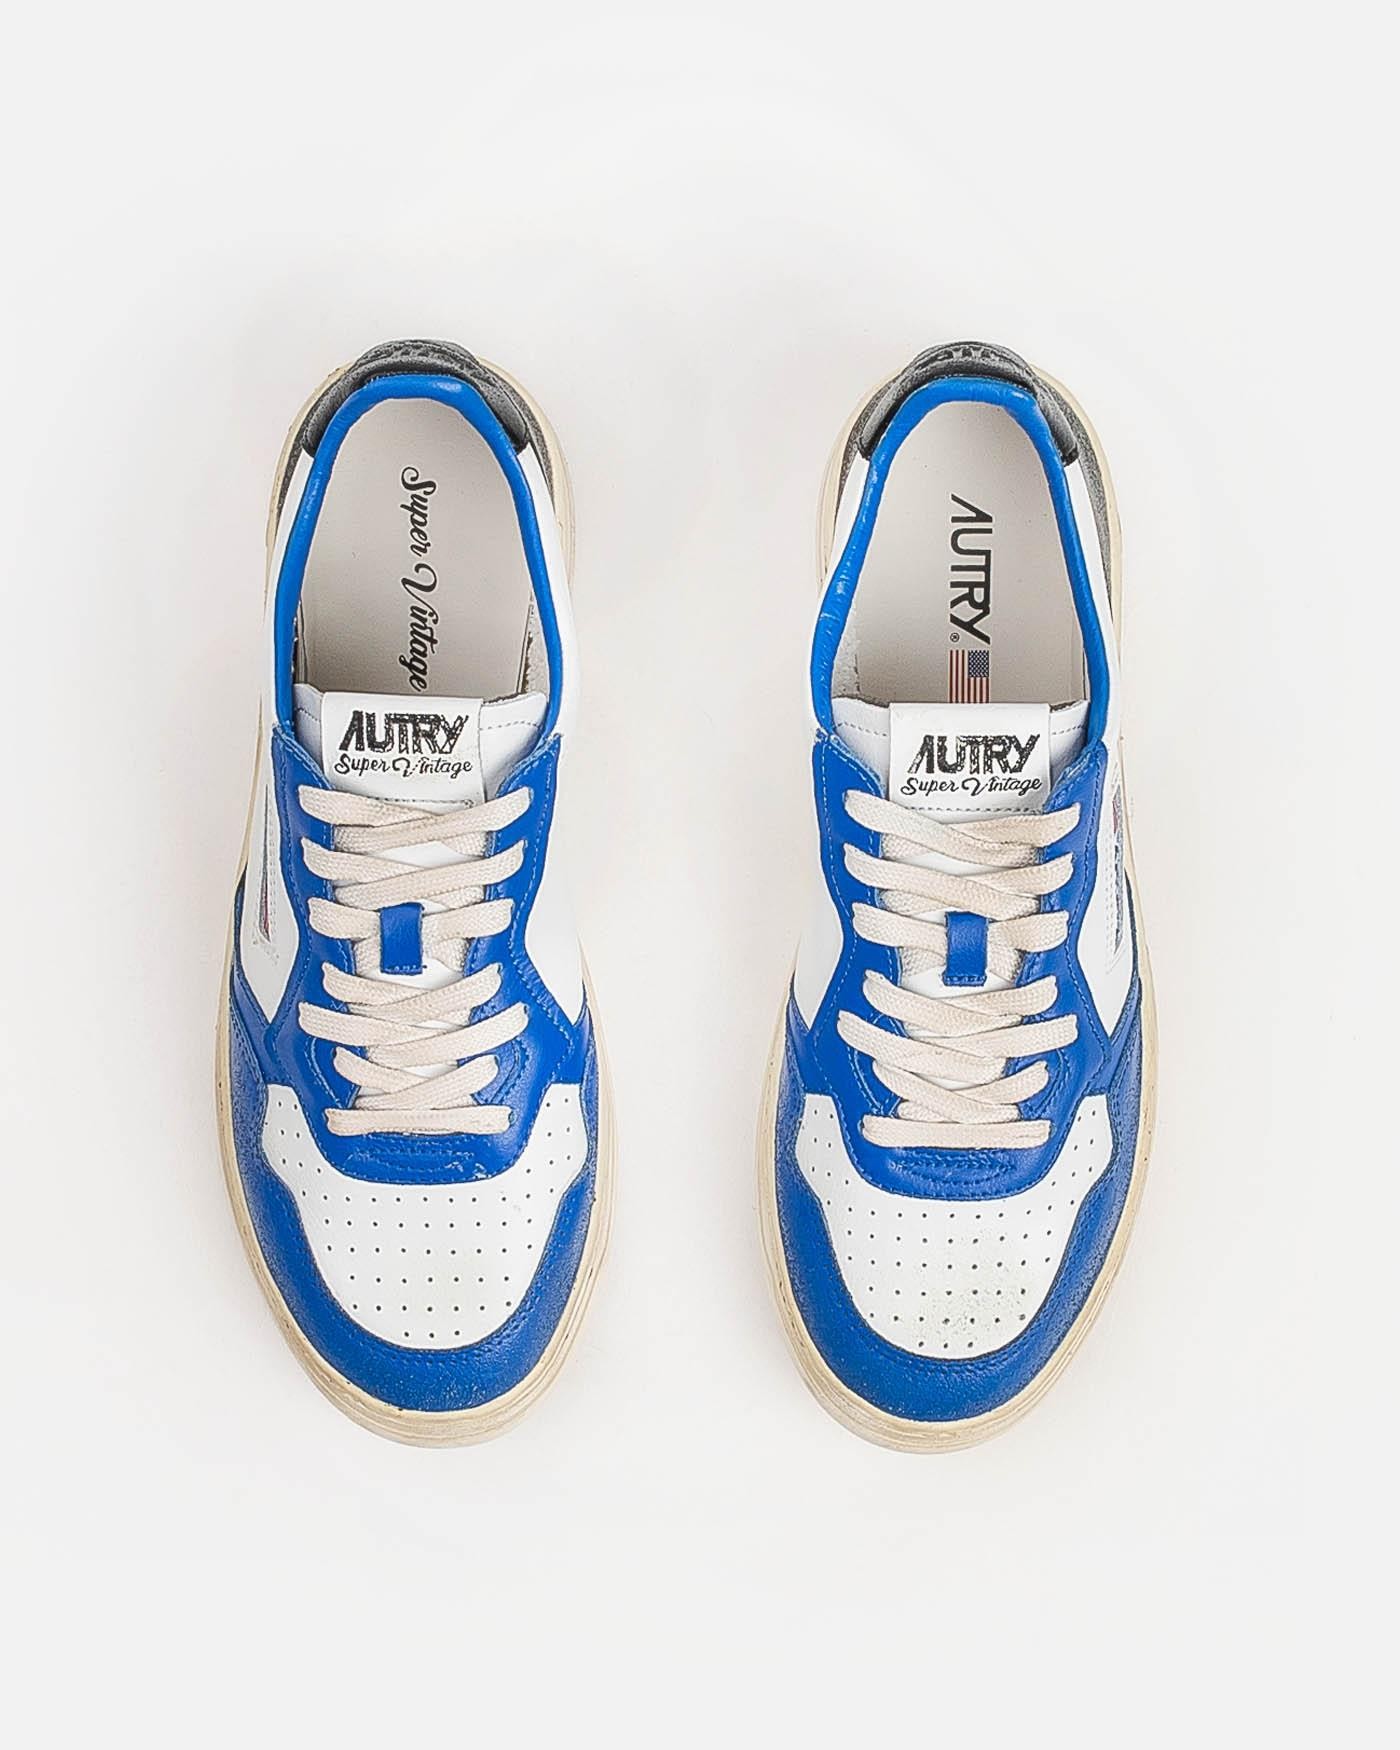 autry-zapatillas-avlm-sv10-sneakers-blue-azules-7